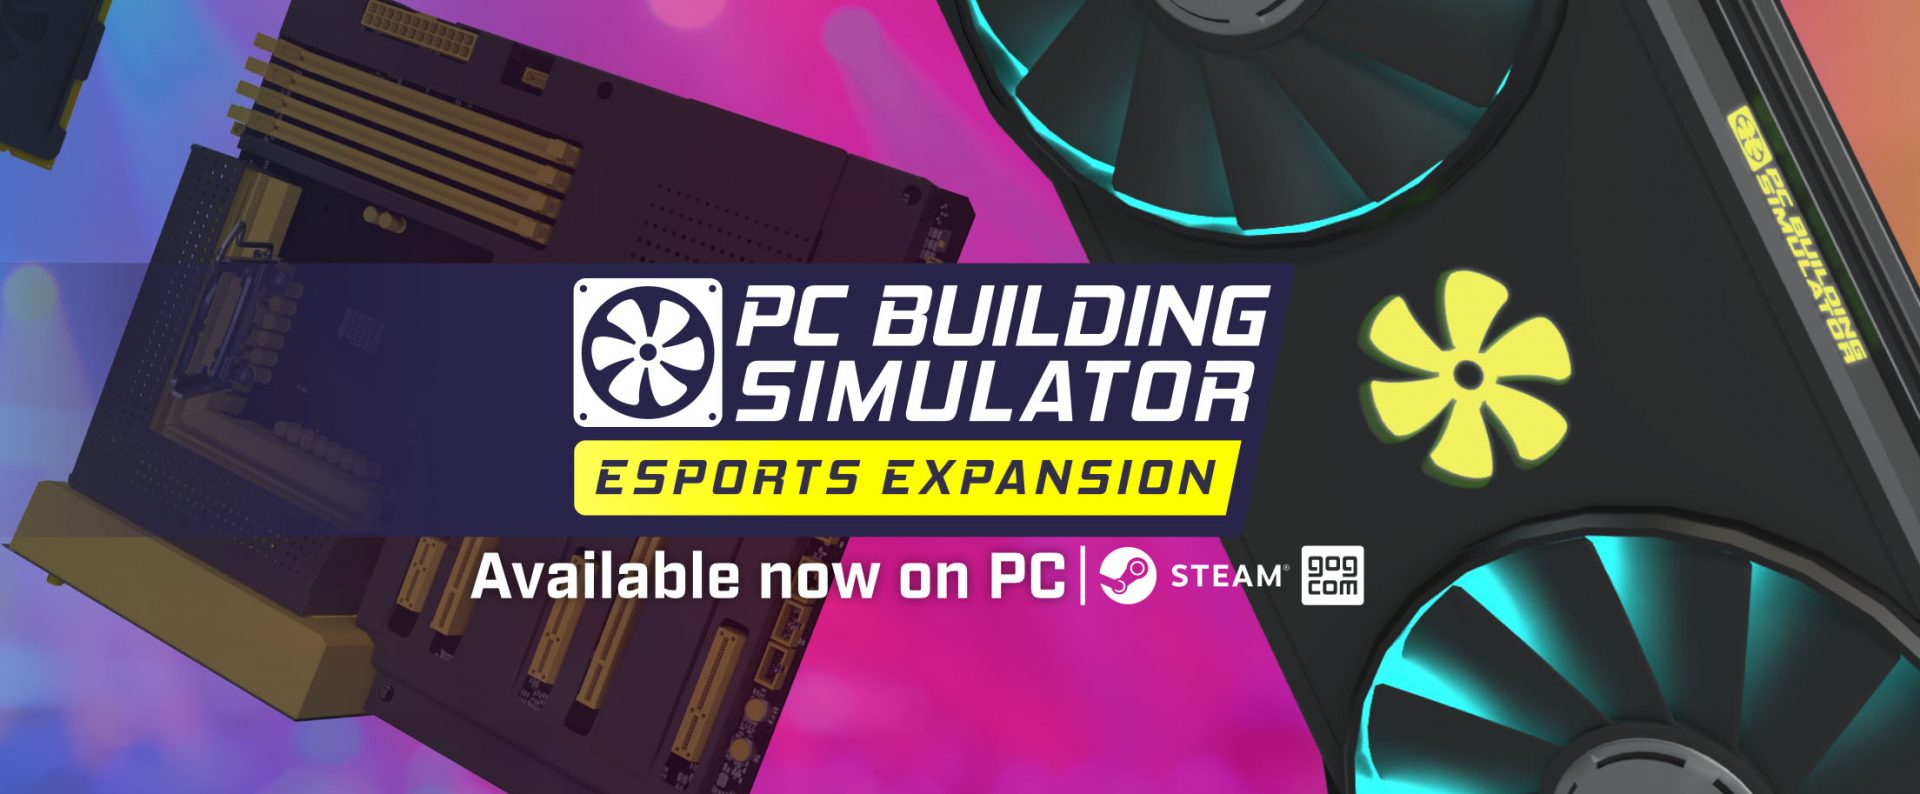 pc building simulator online mod